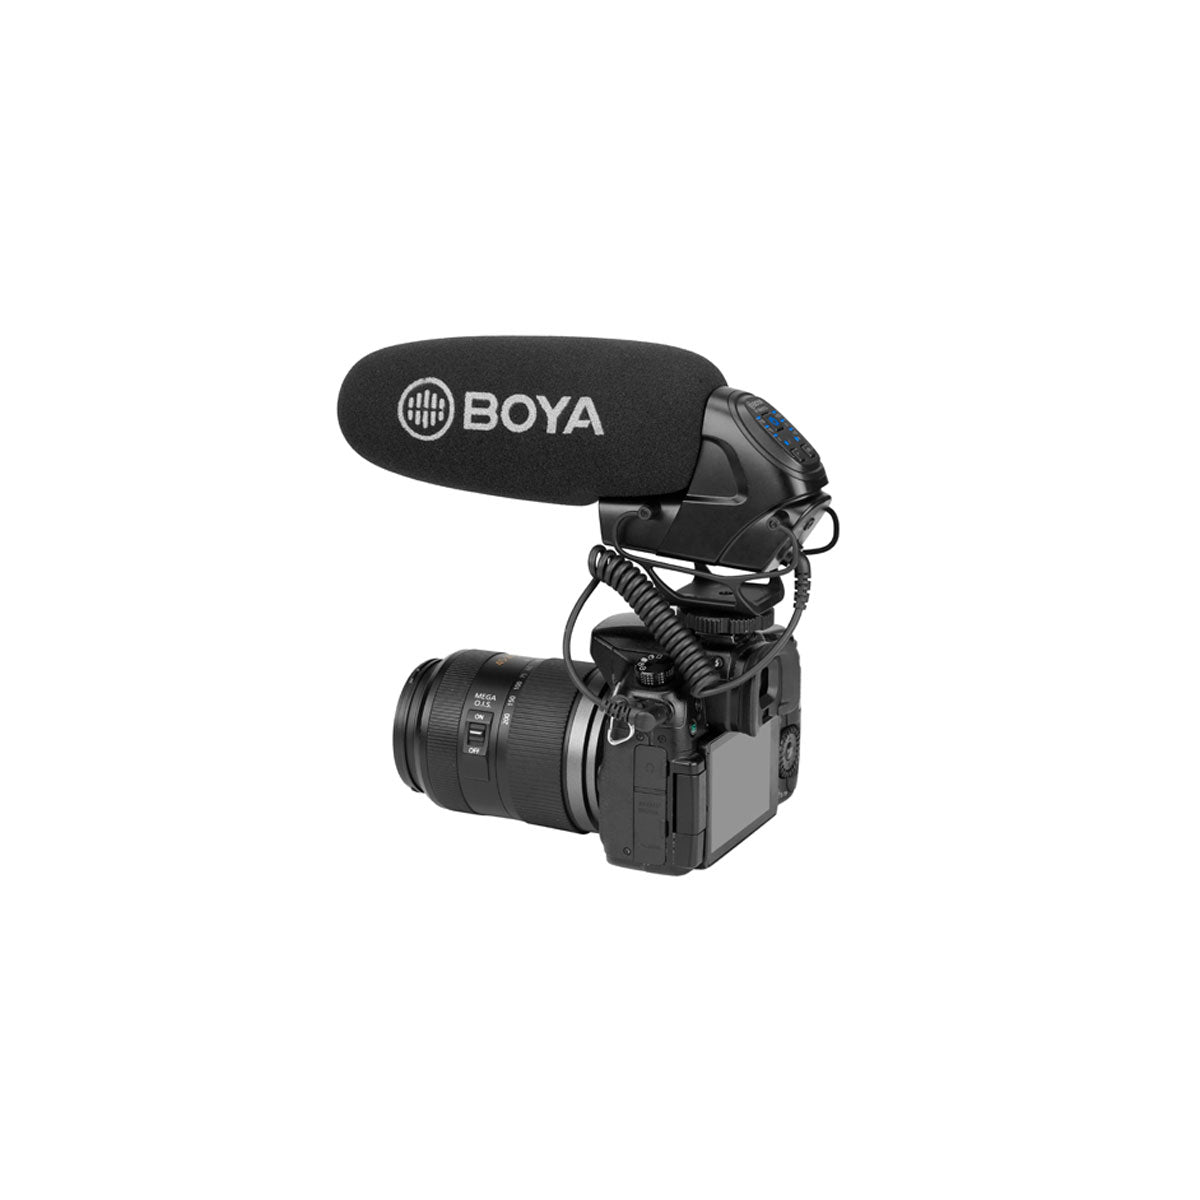 BOYA BM3032 專業級相機機頂咪 槍型咪高風 Microworks Online Store